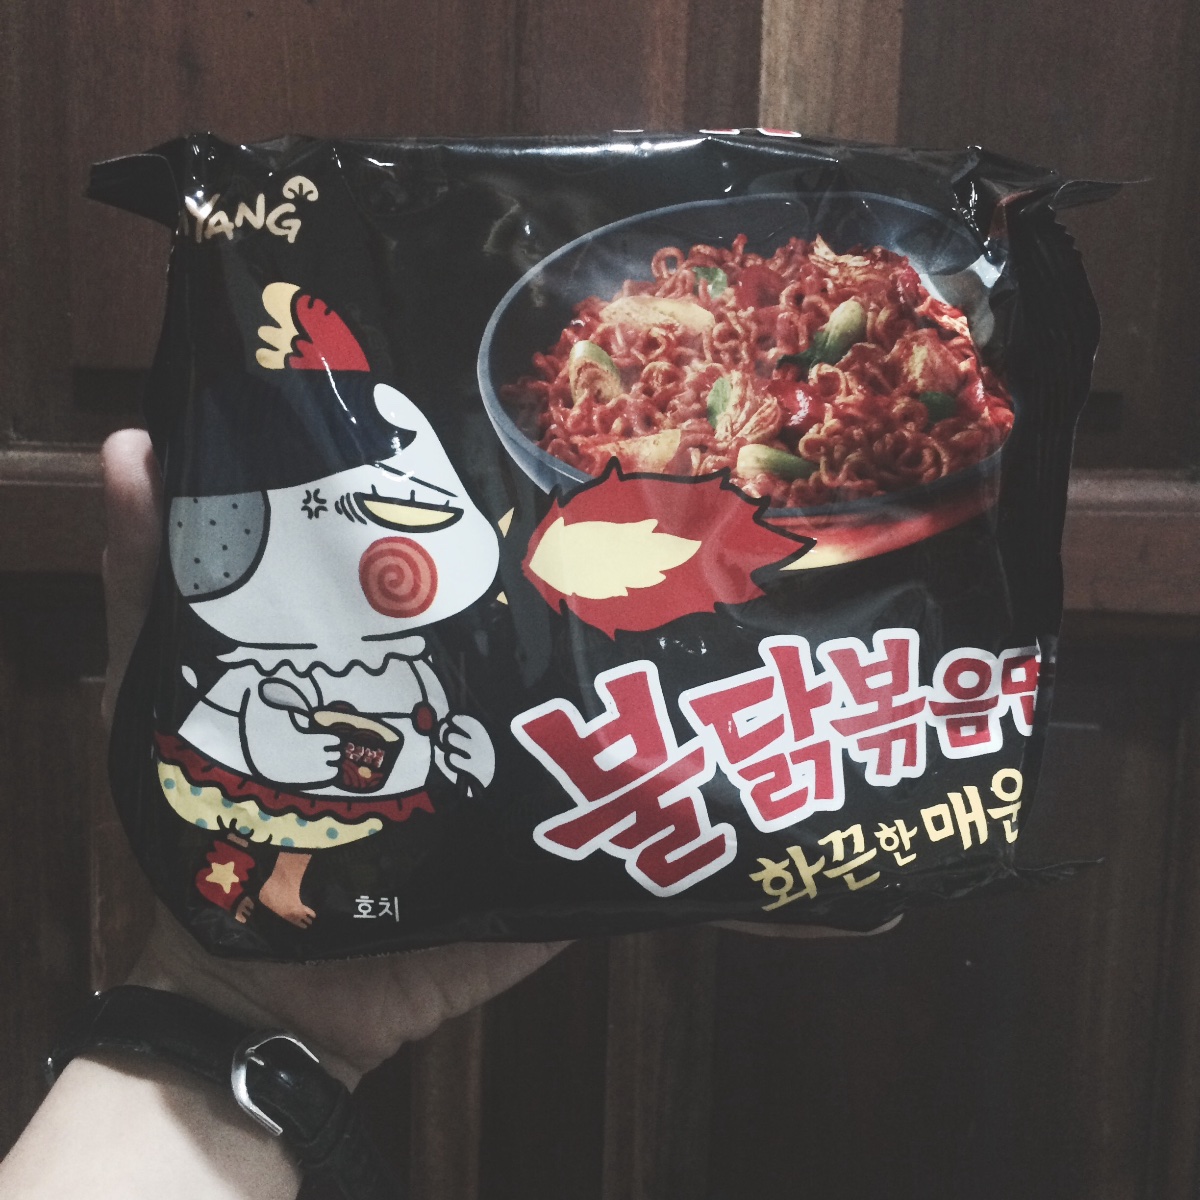 Spicy noodles #samyang